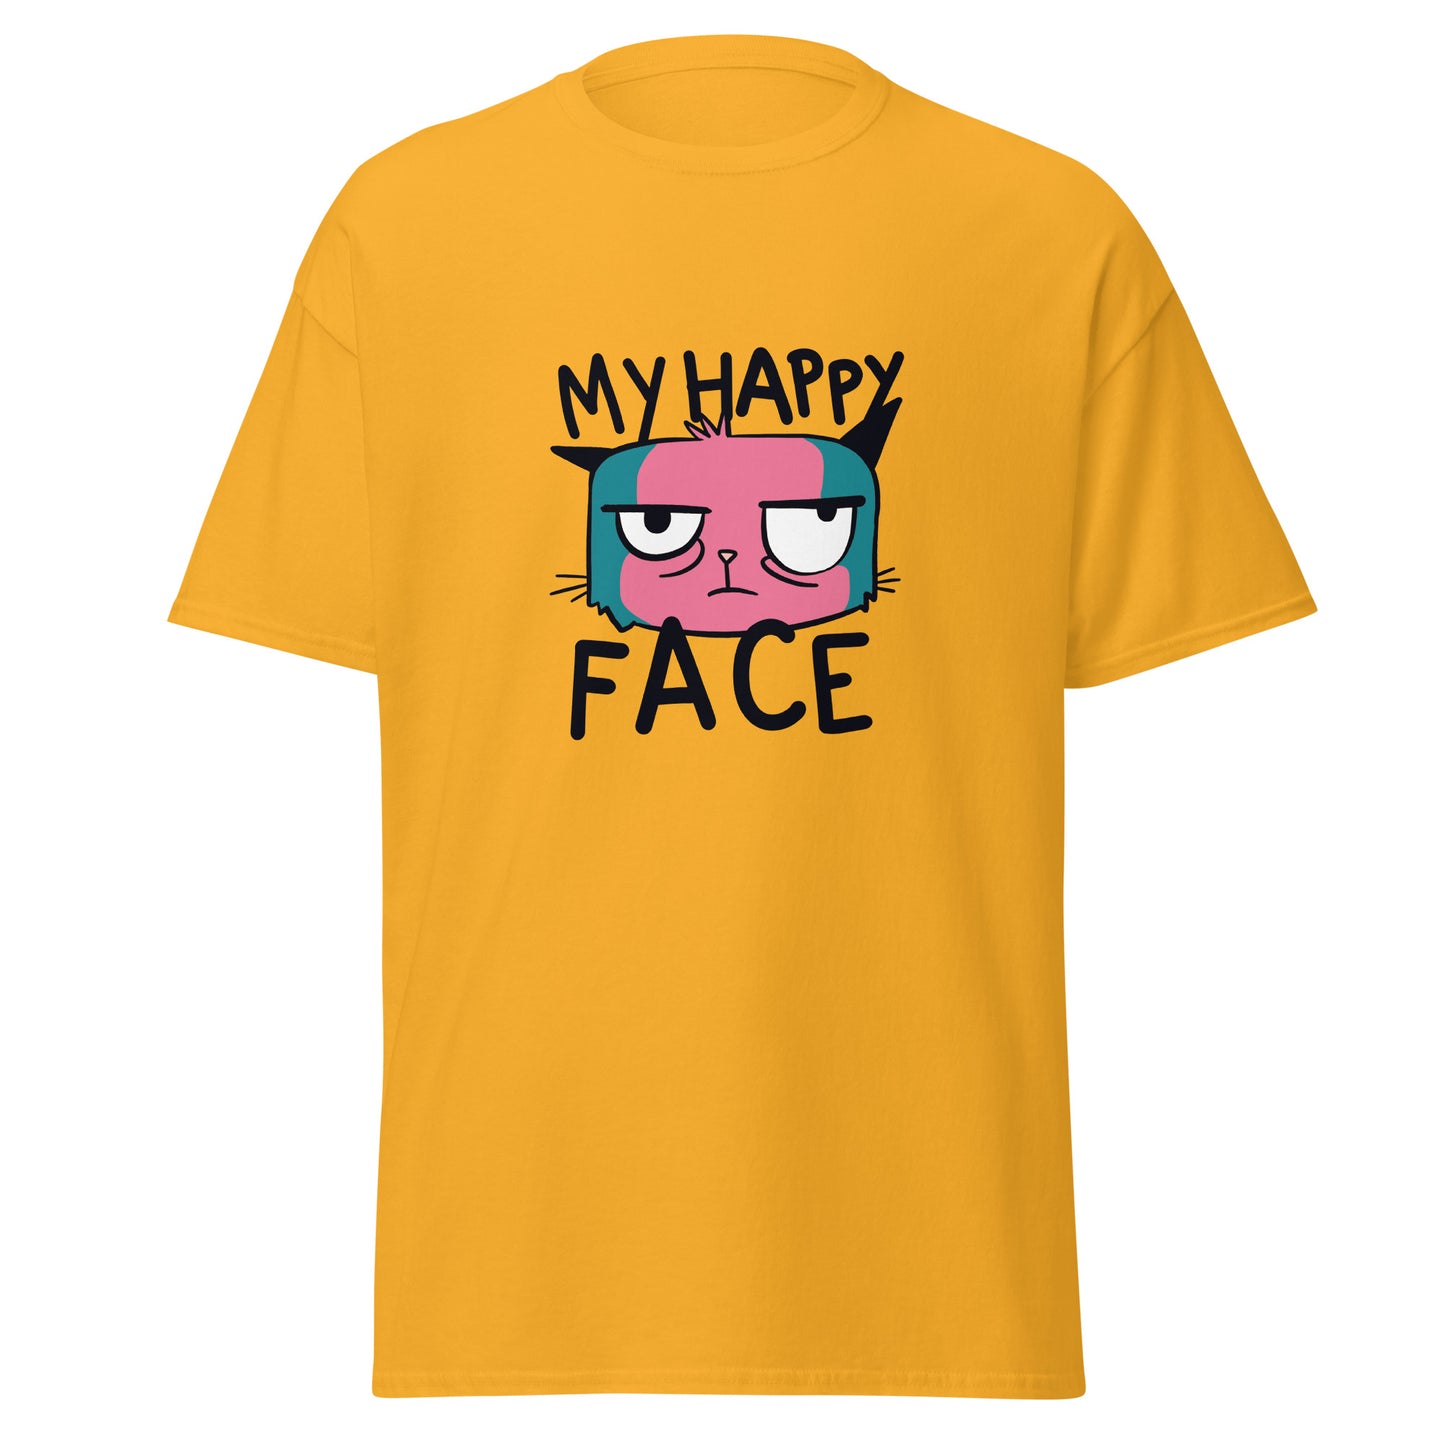 My happy face T-Shirt